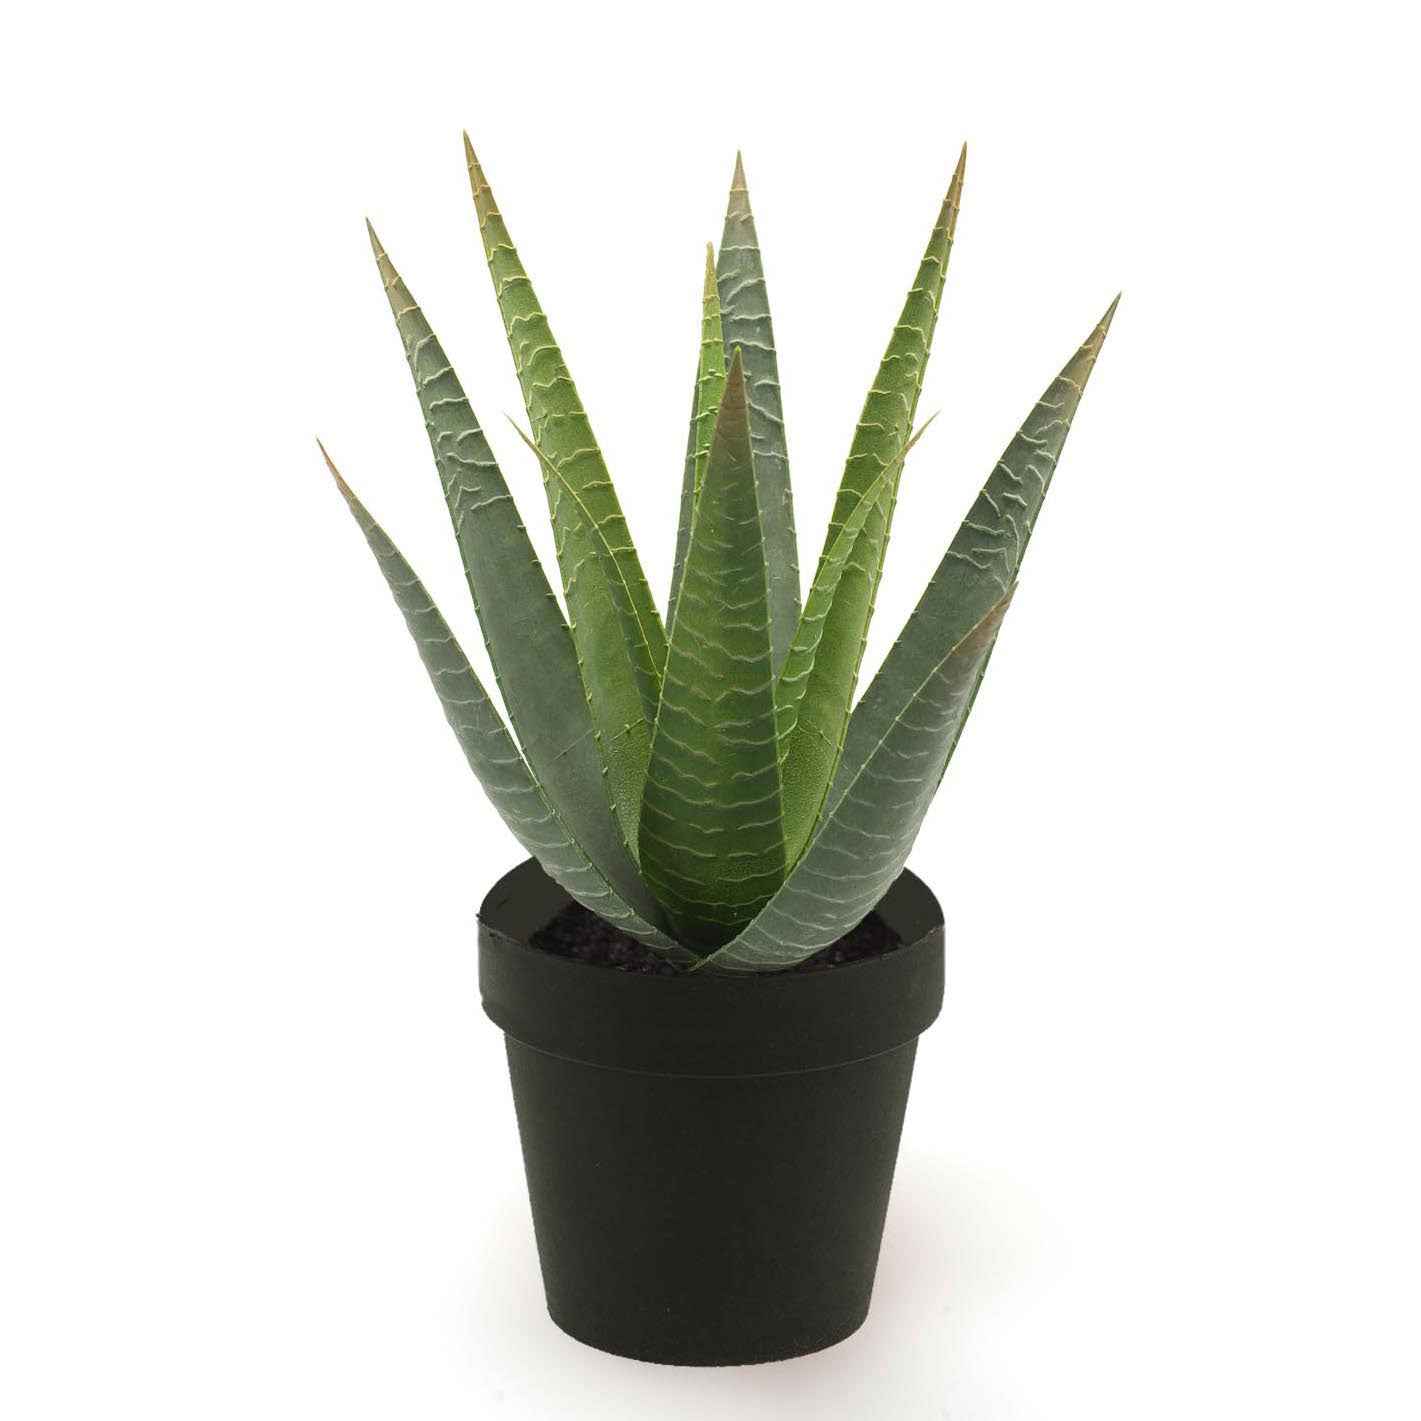 Kunstplant Aloe vera incl. sierpot zwart - Alle kunstplanten